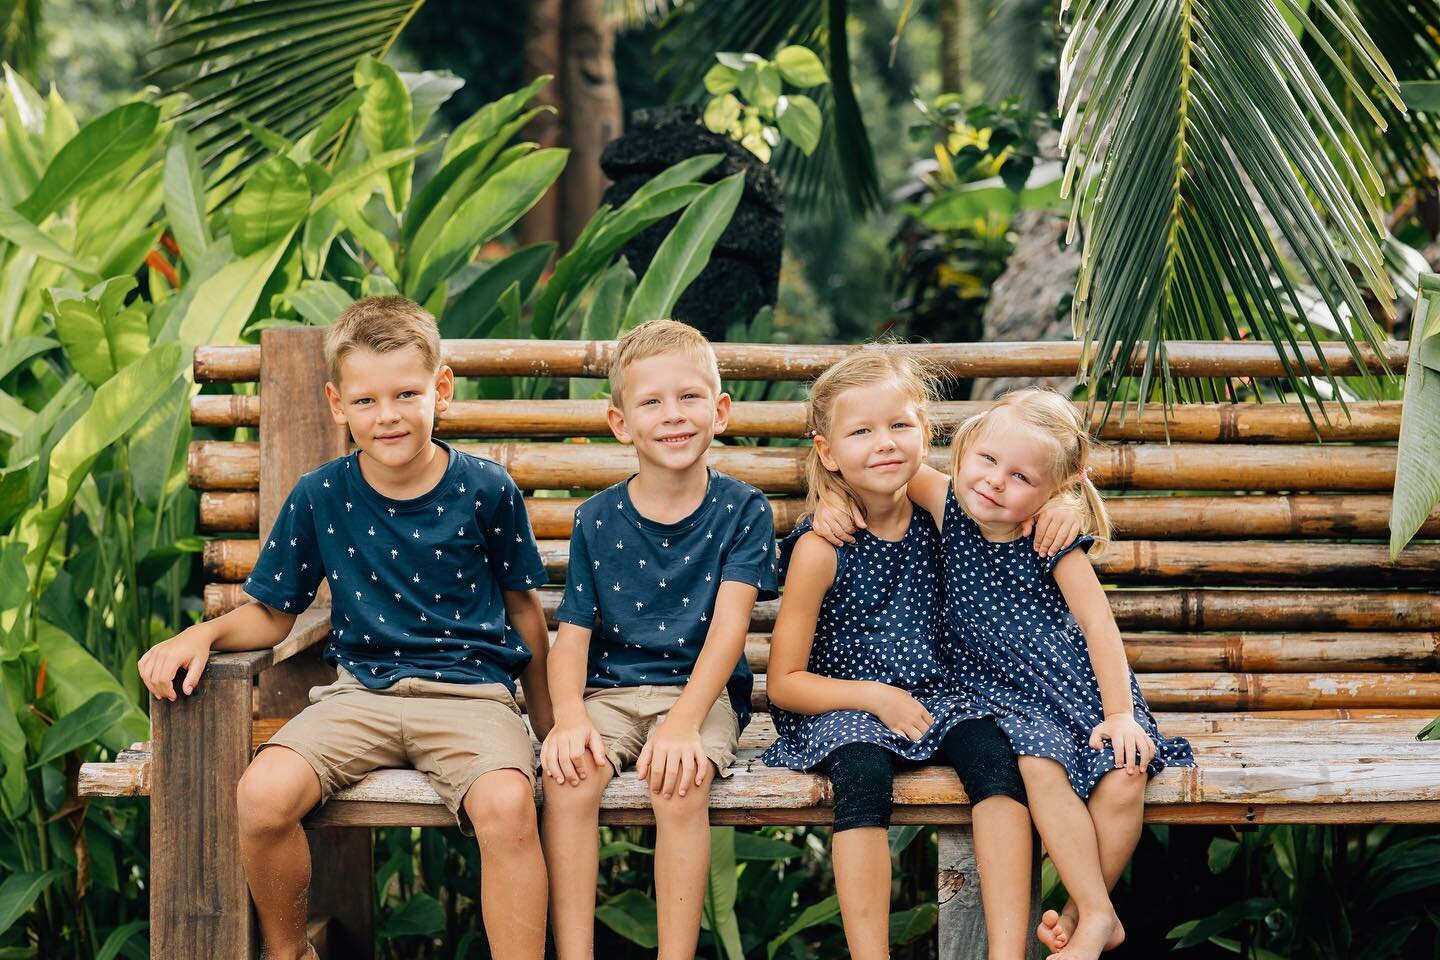 Four siblings all one year apart! 👦🏼 👧👦🏼👧
.
.
.
.
#nivastudios #familywanderlust 
 #candidchildhood #wildandbravelittles  #childofig #childrenofig #vanuatufamilyphotographer #vanuatufamilyphotography #adventuresofchildren #letthekids  #simplych